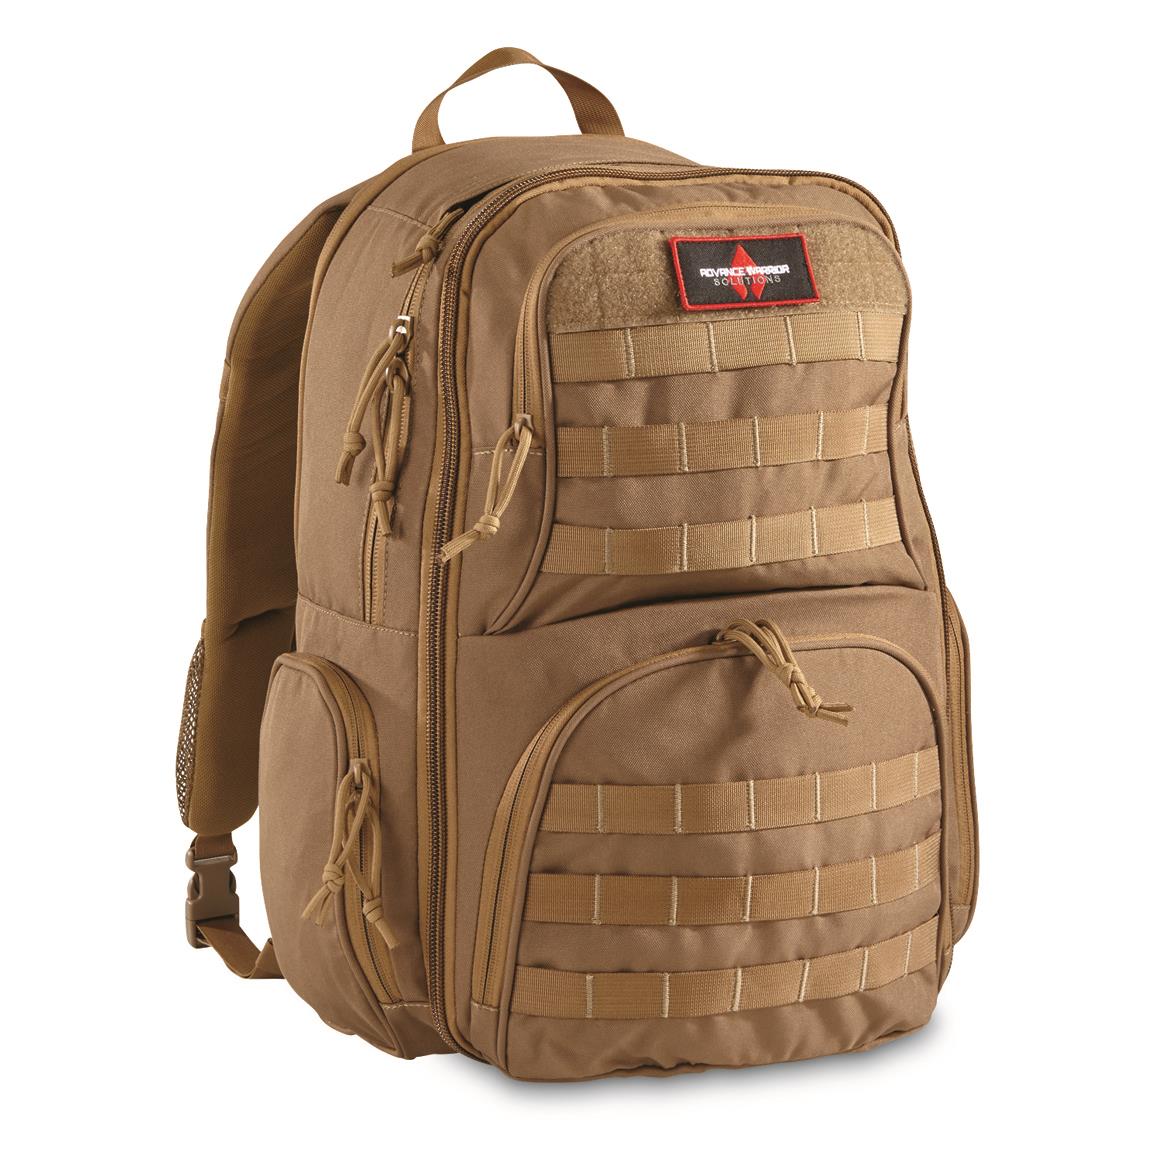 Advanced Warrior Solutions Juggernaut 5-day 43L Backpack, Tan